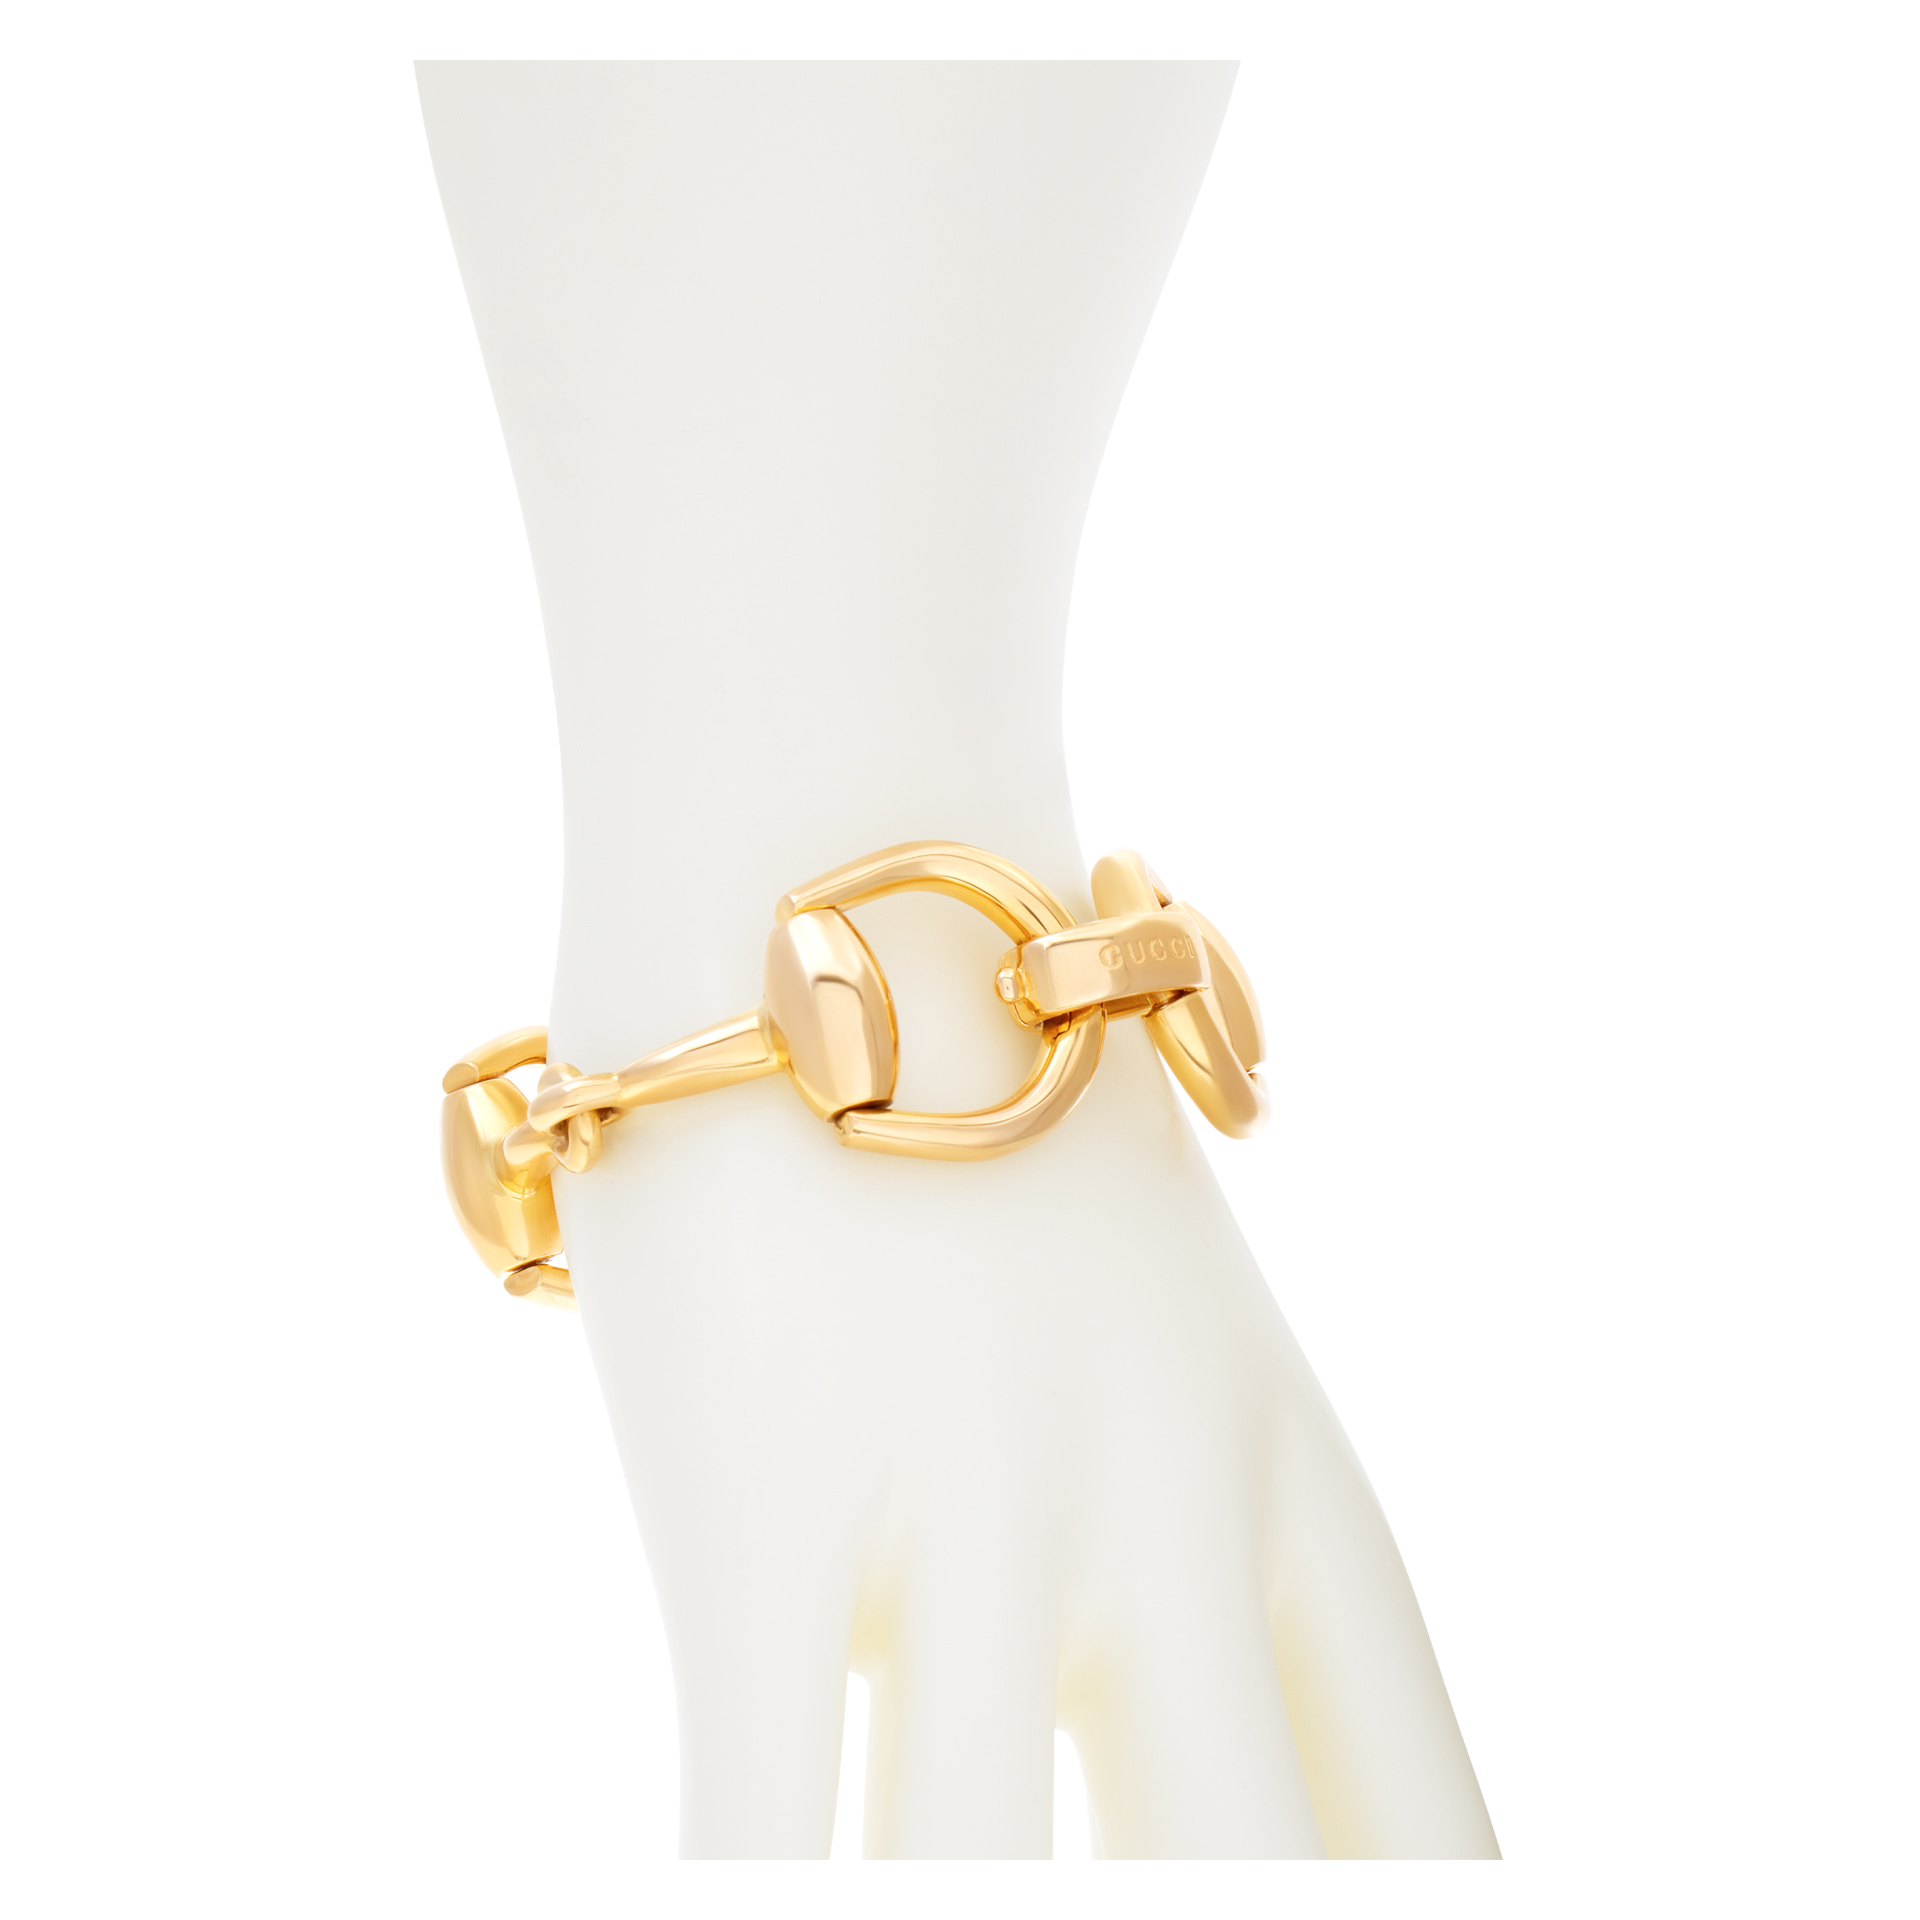 Gucci Horsebit bracelet in 18k image 2